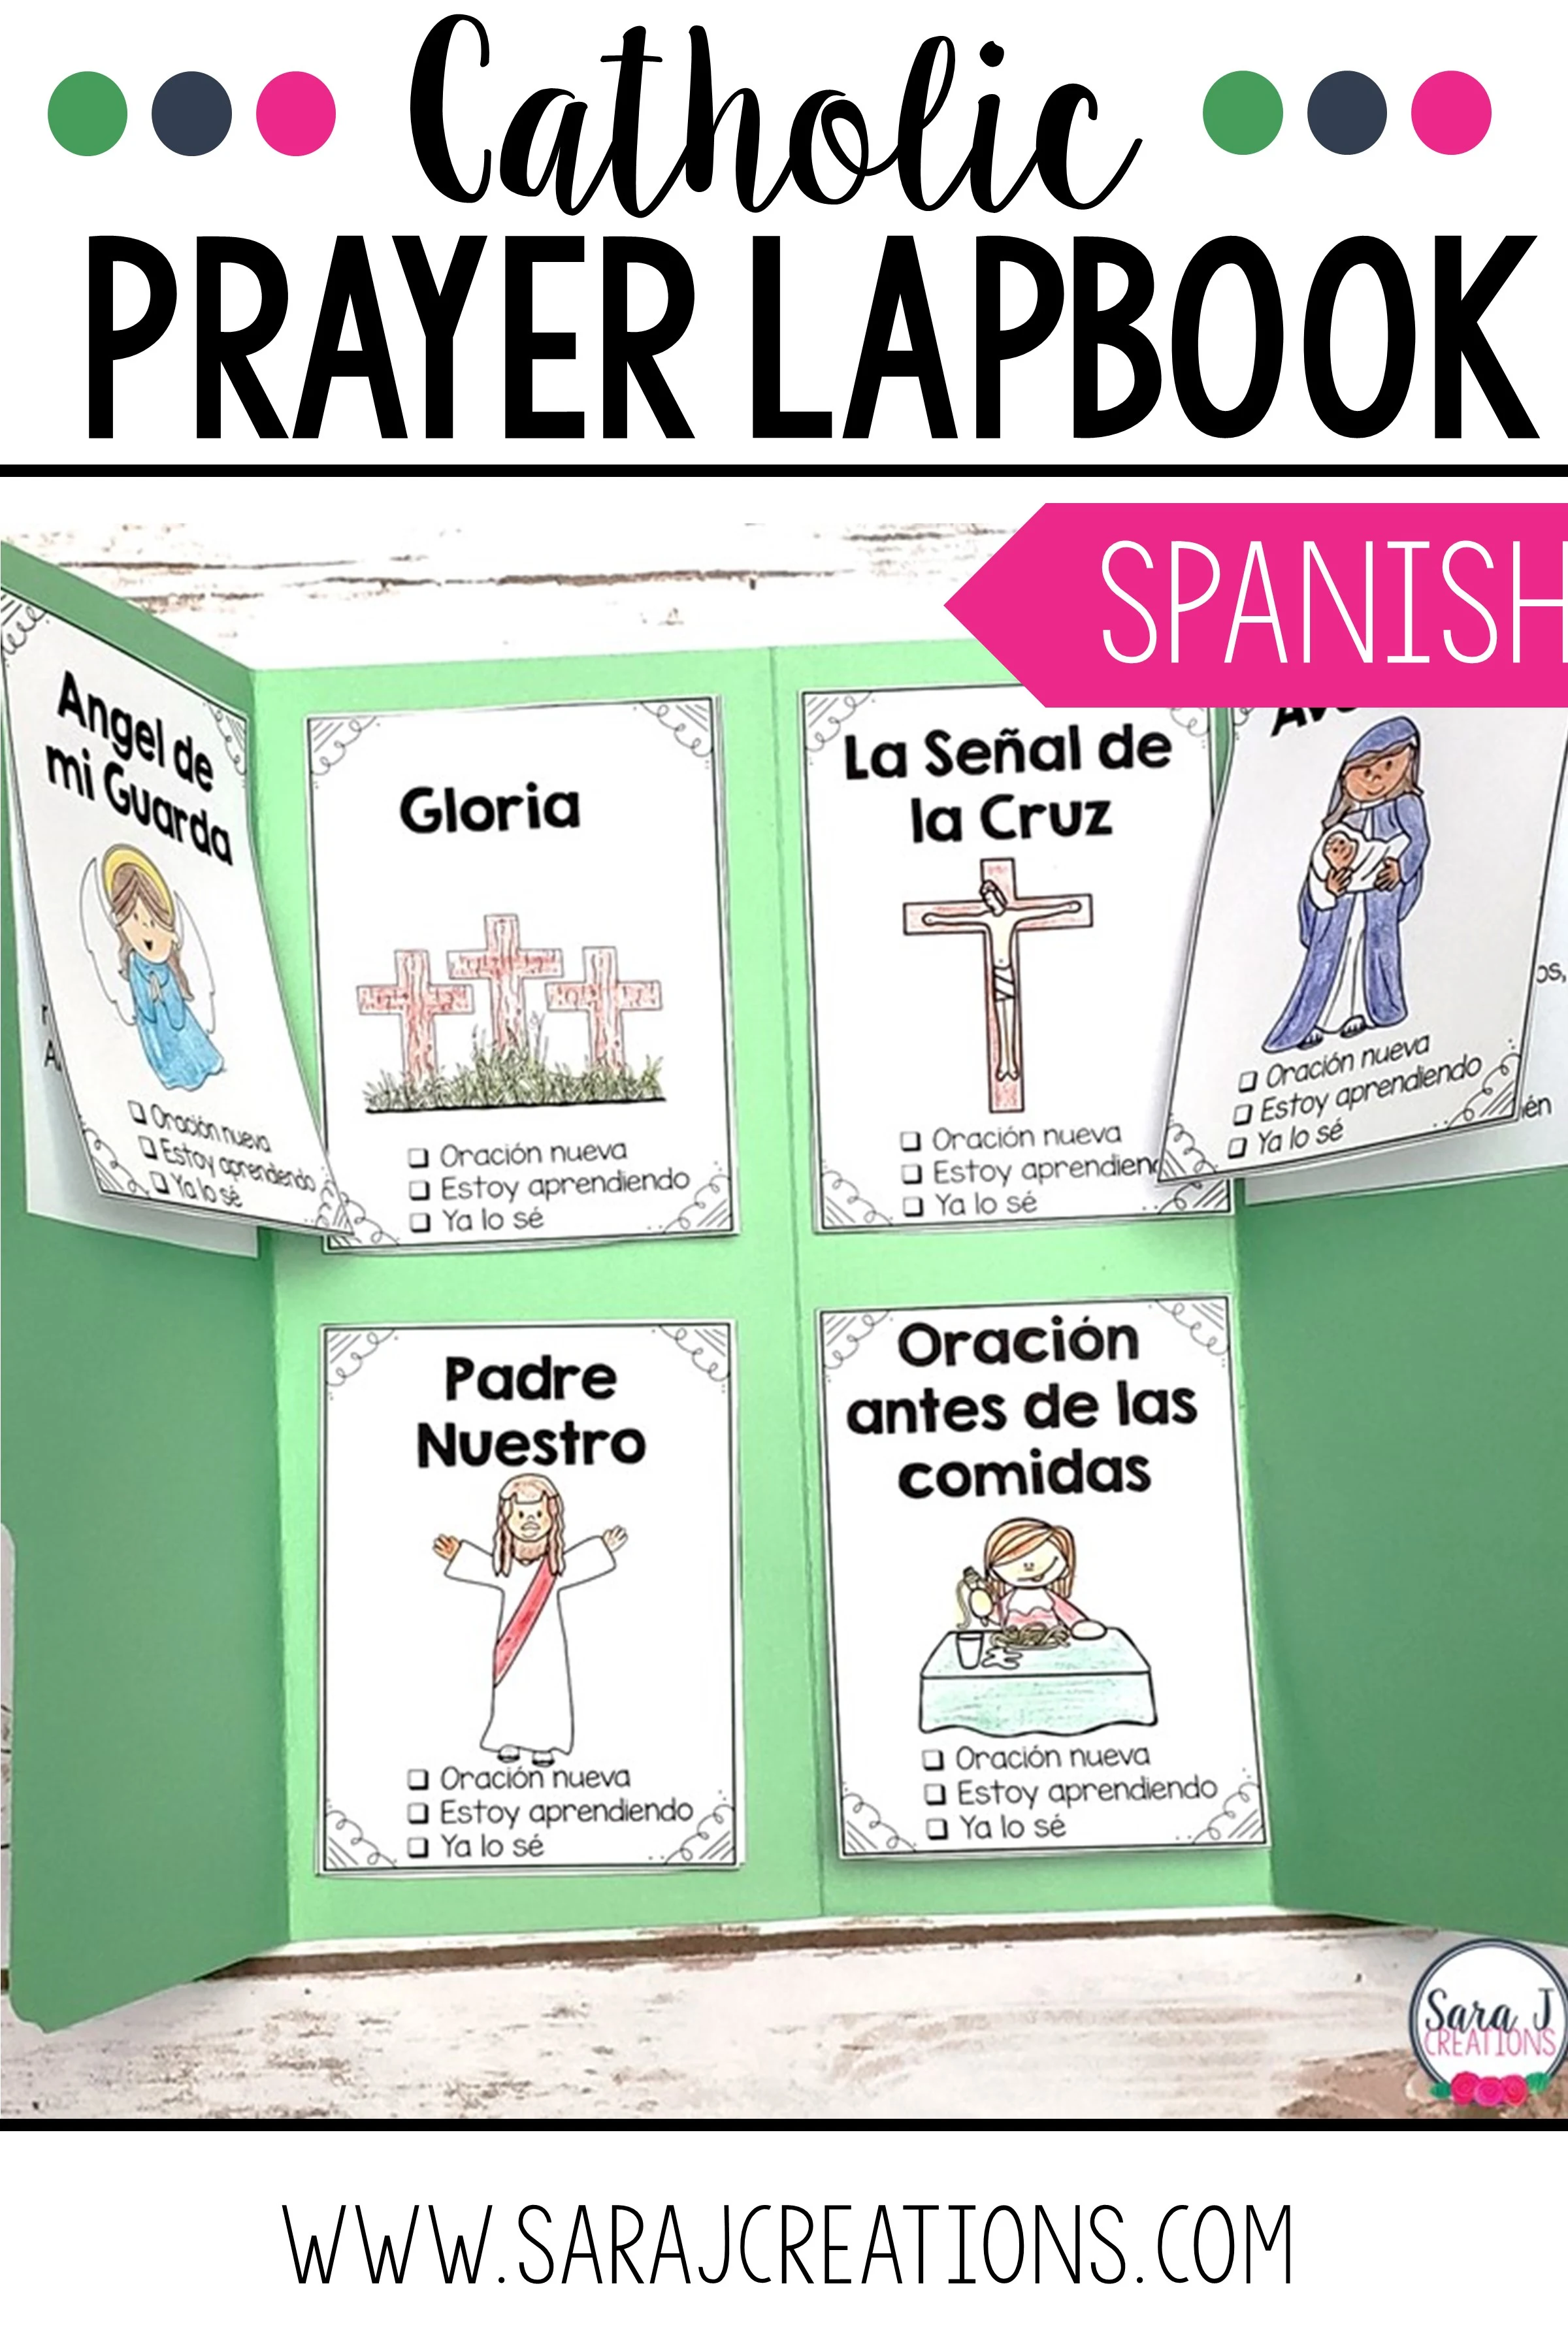 Catholic prayers lapbook in Spanish for Kids